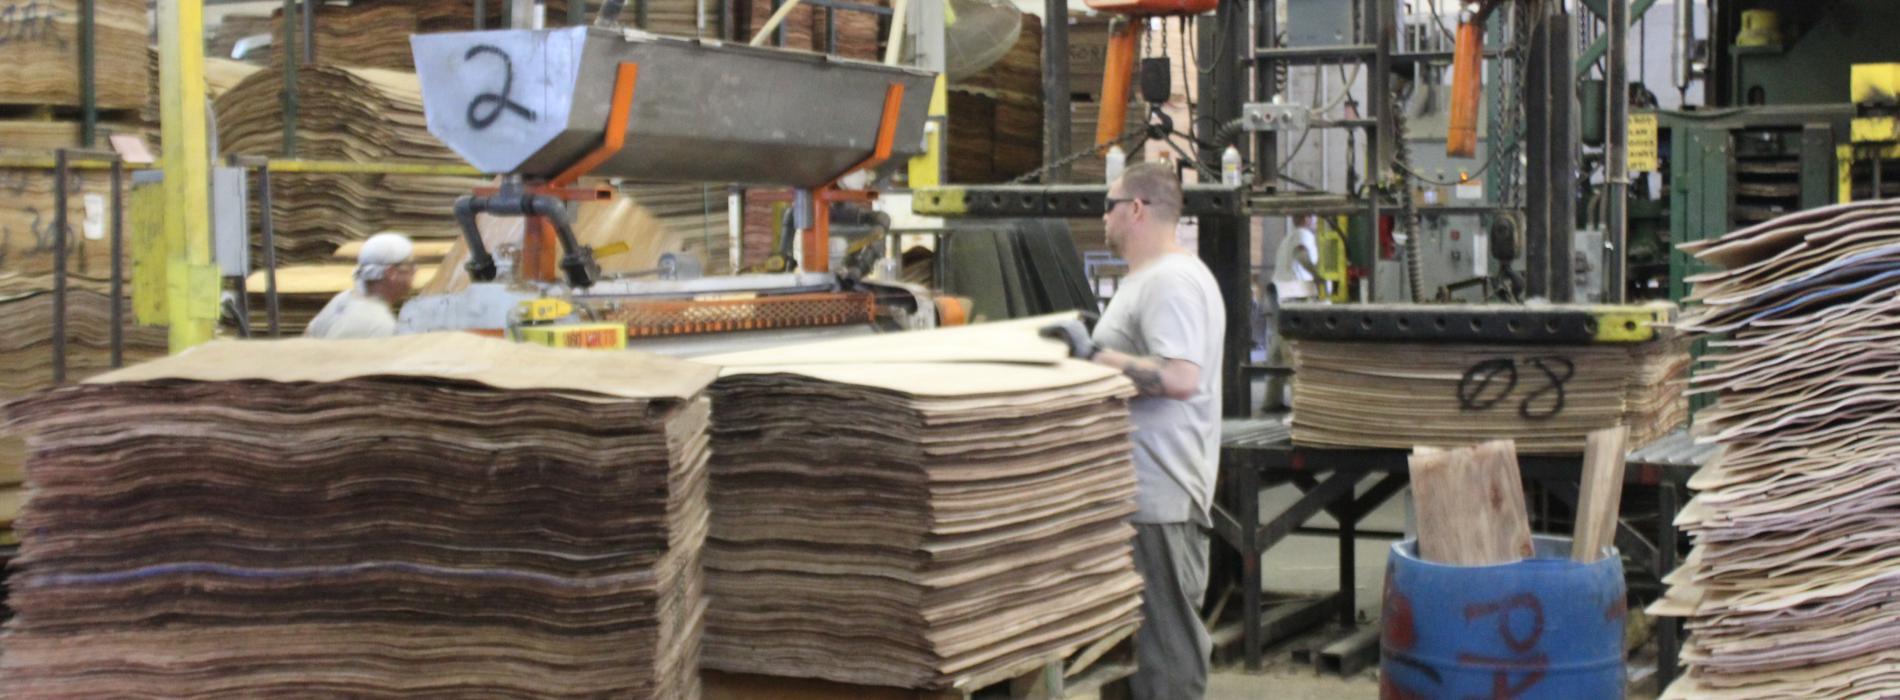 SCDC Industries inmates building wood flooring for industry partner